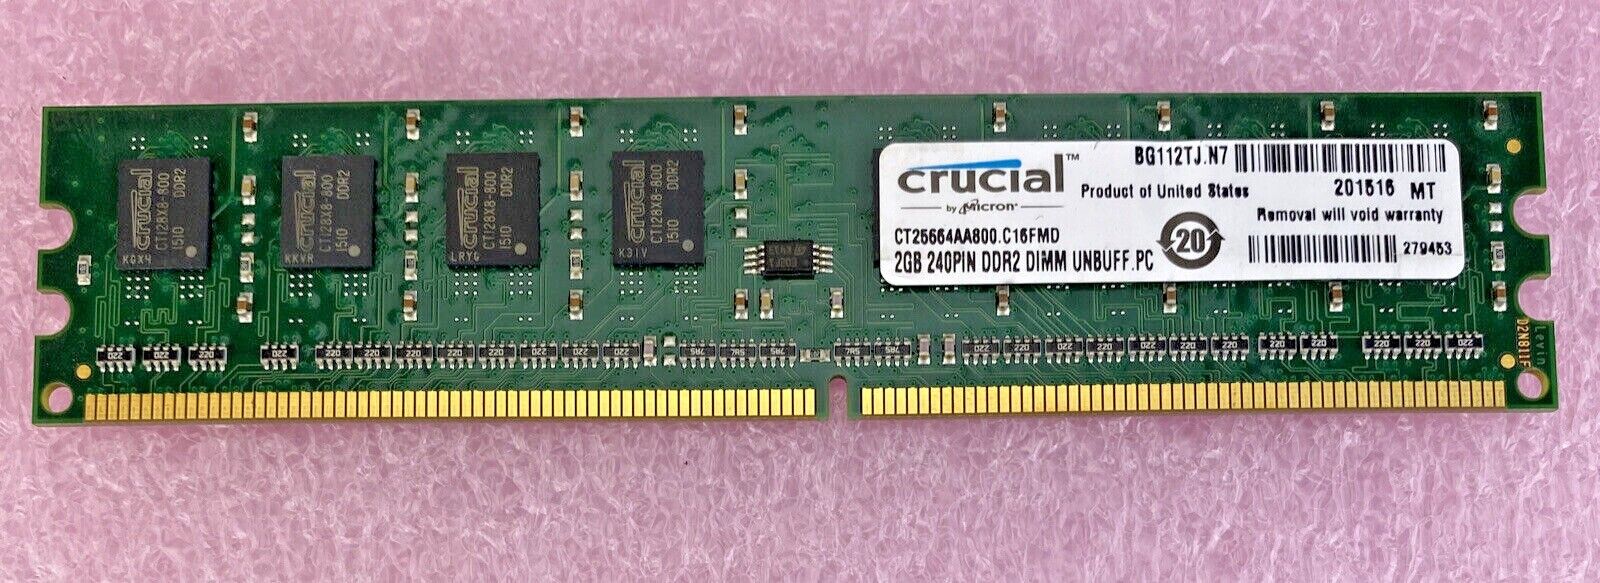 2GB Crucial CT25664AA800.C16FMD PC2-6400 800MHz non-ECC DDR2 RAM